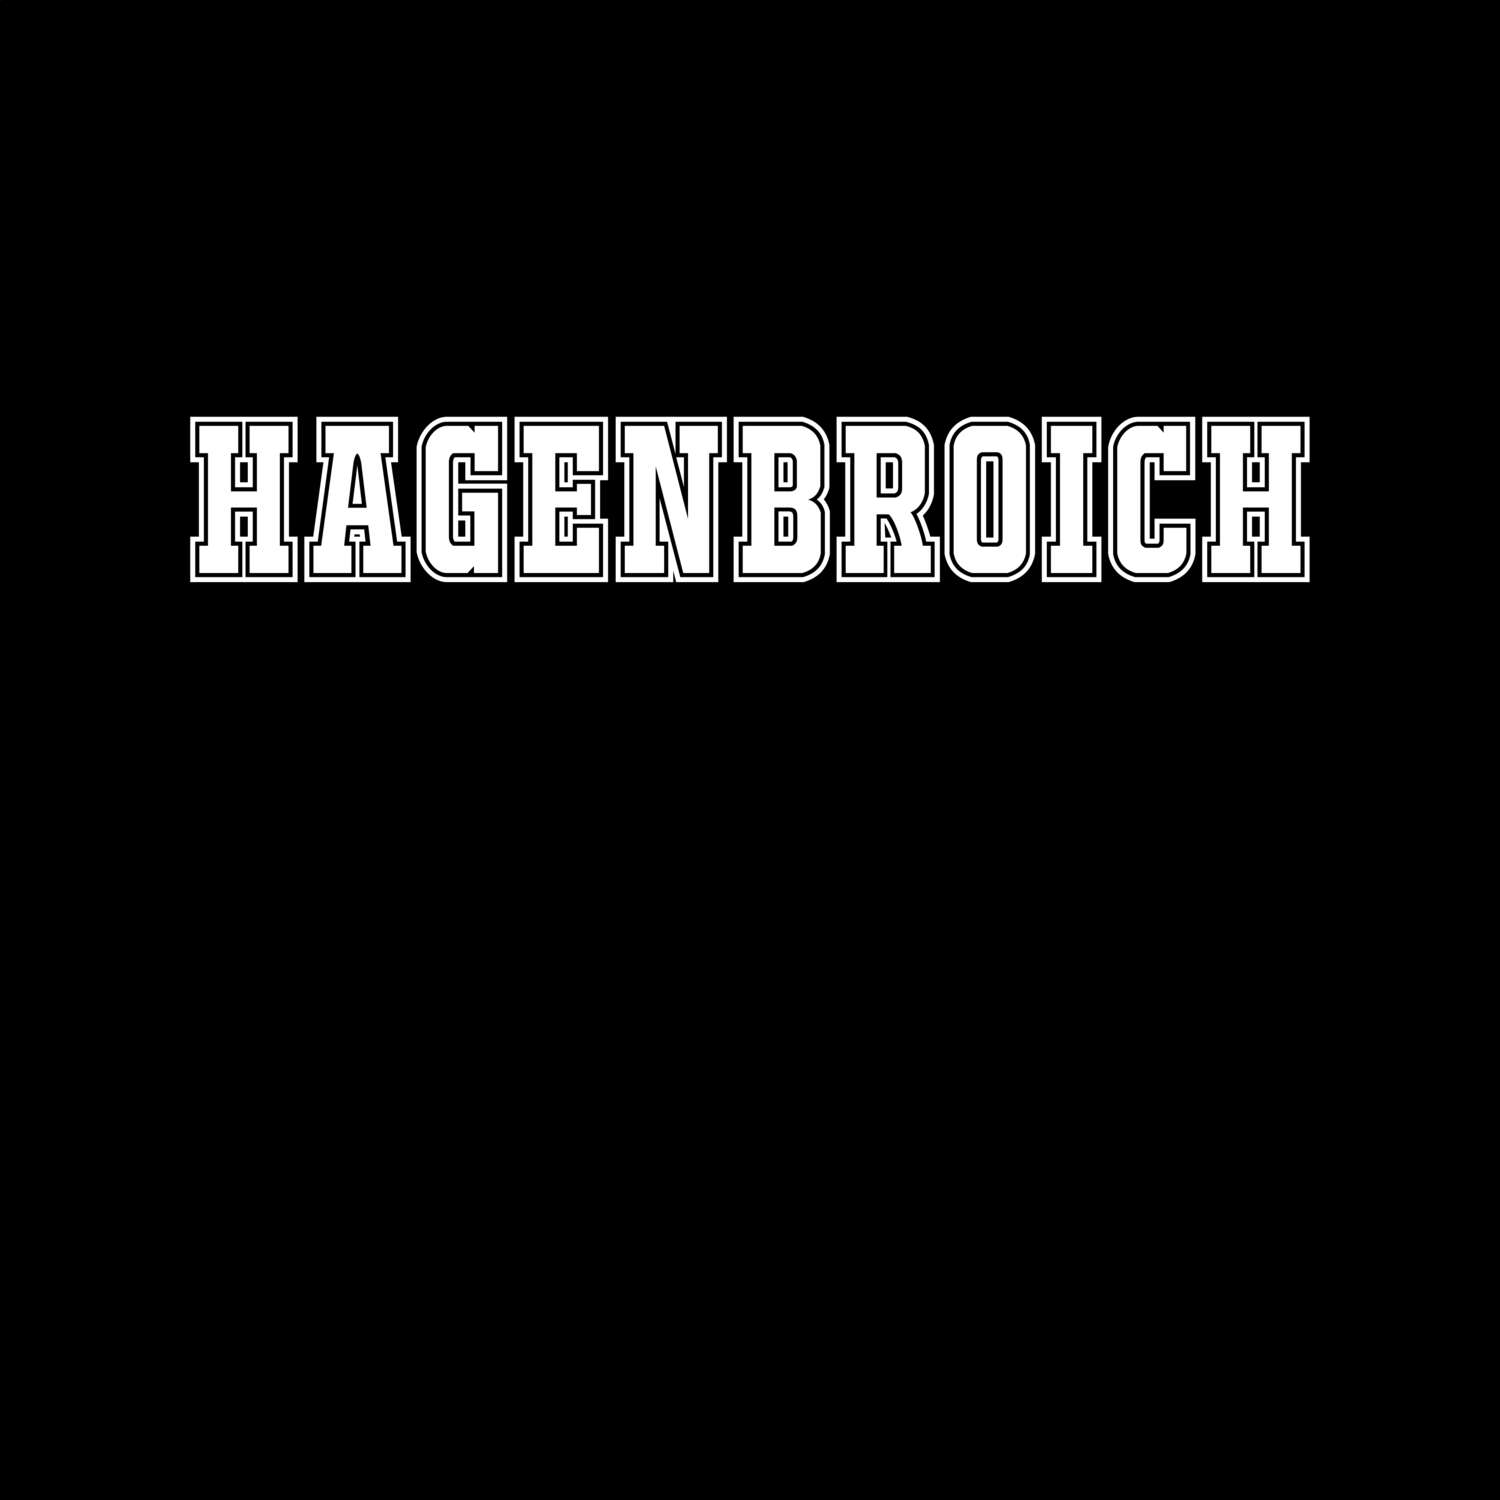 Hagenbroich T-Shirt »Classic«